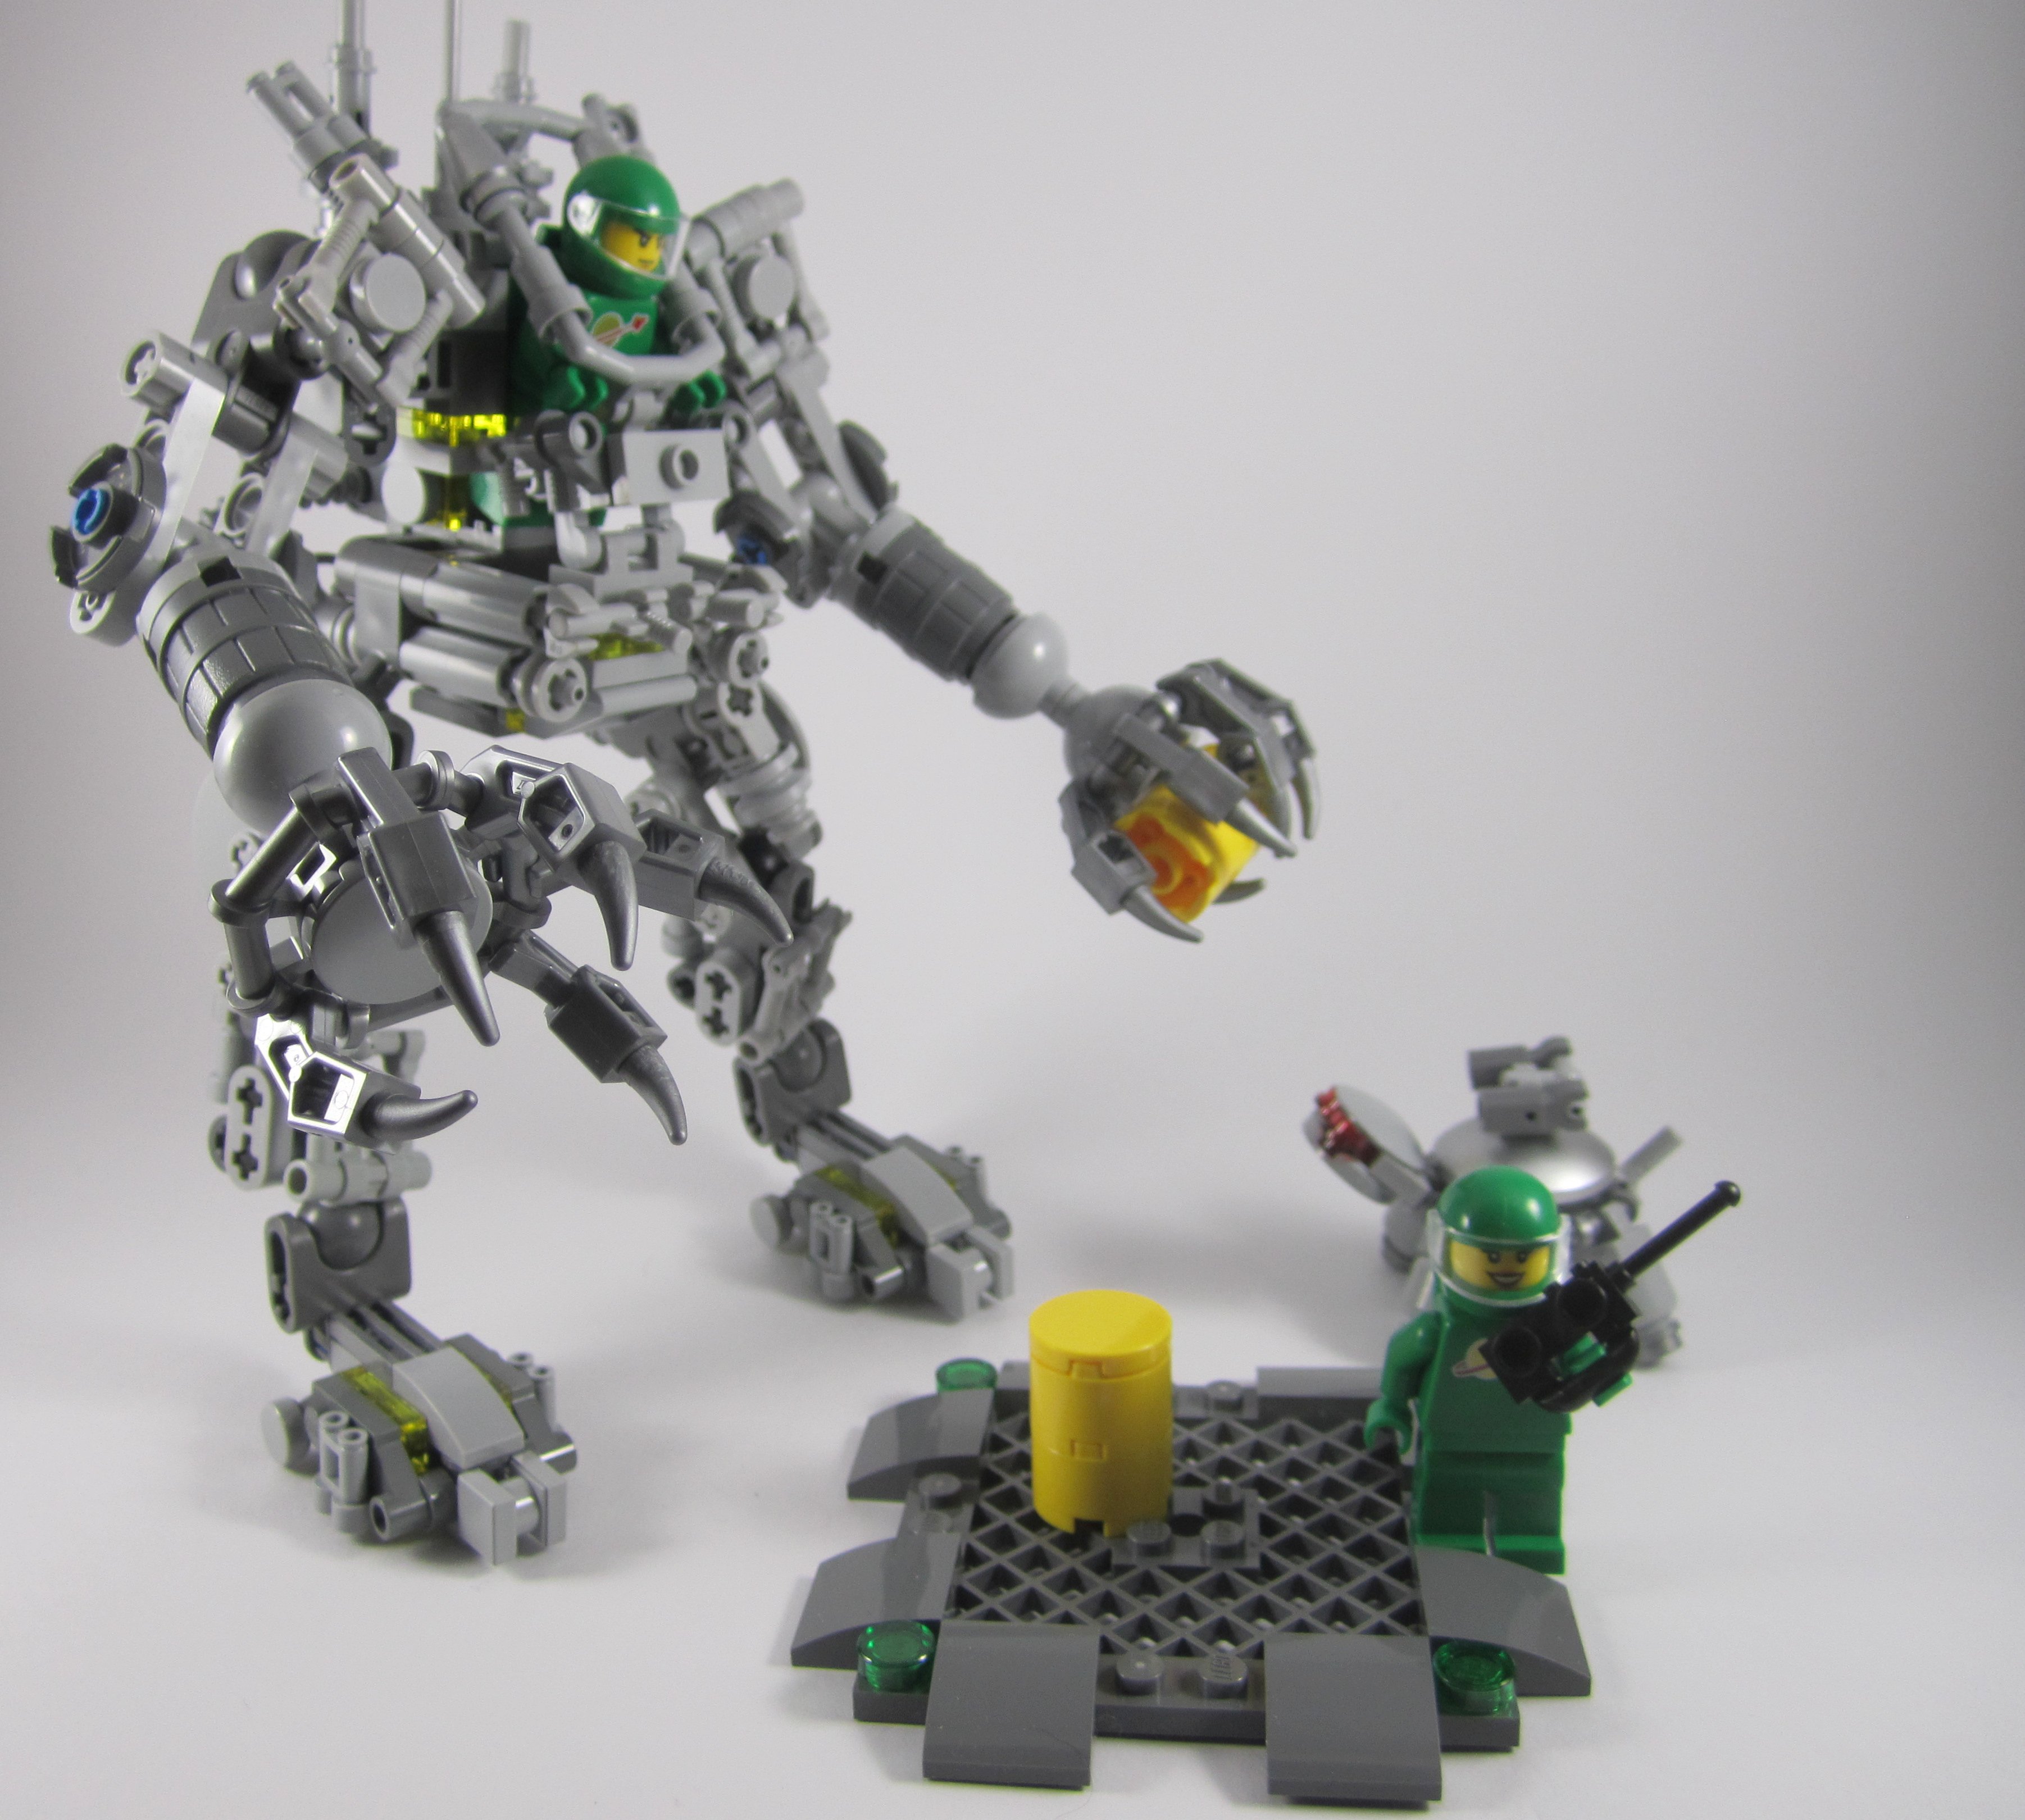 Review: LEGO Ideas Suit Jay's Brick